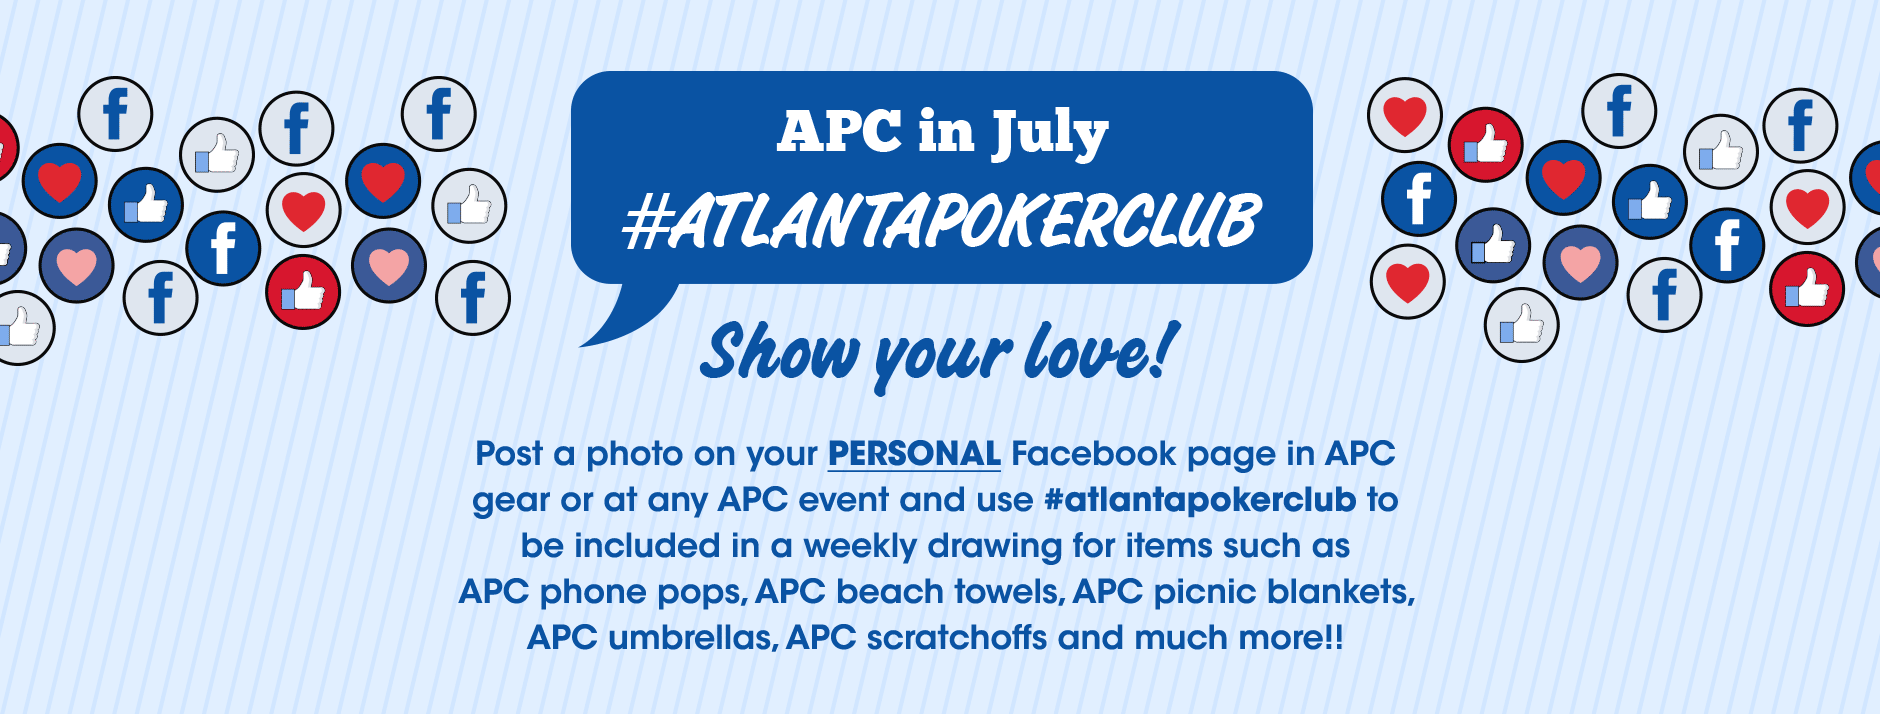 Show your #atlantapokerclub love for the APC